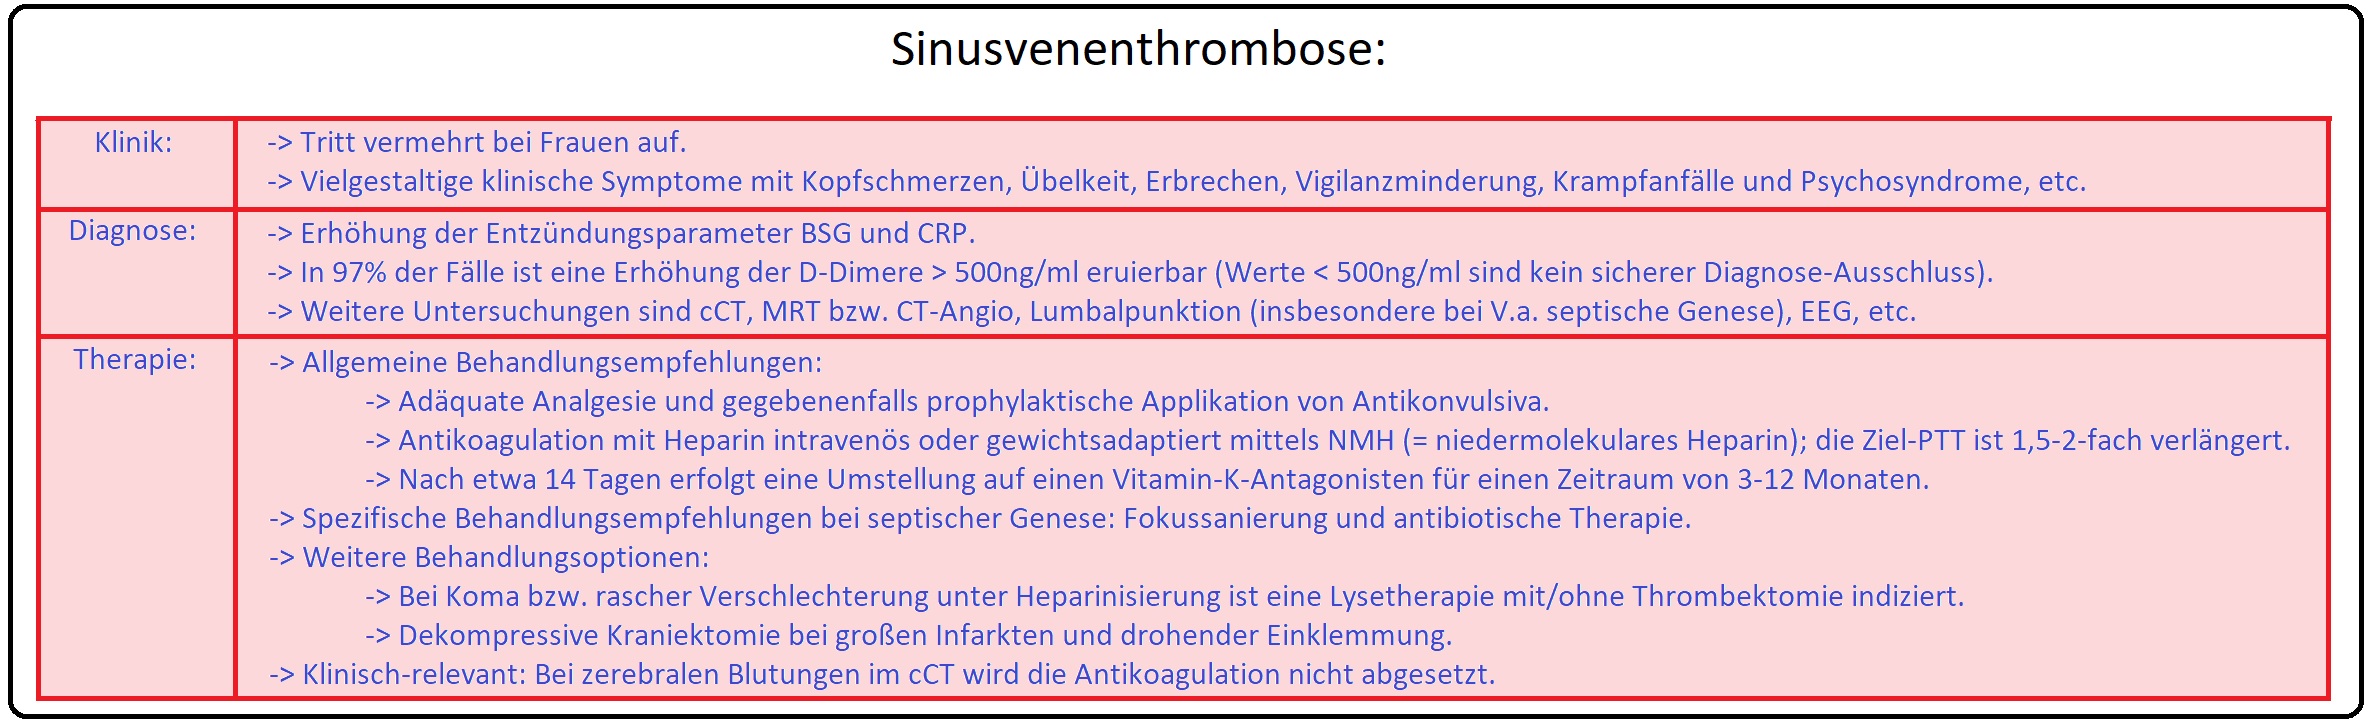 088 Sinusvenenthrombose